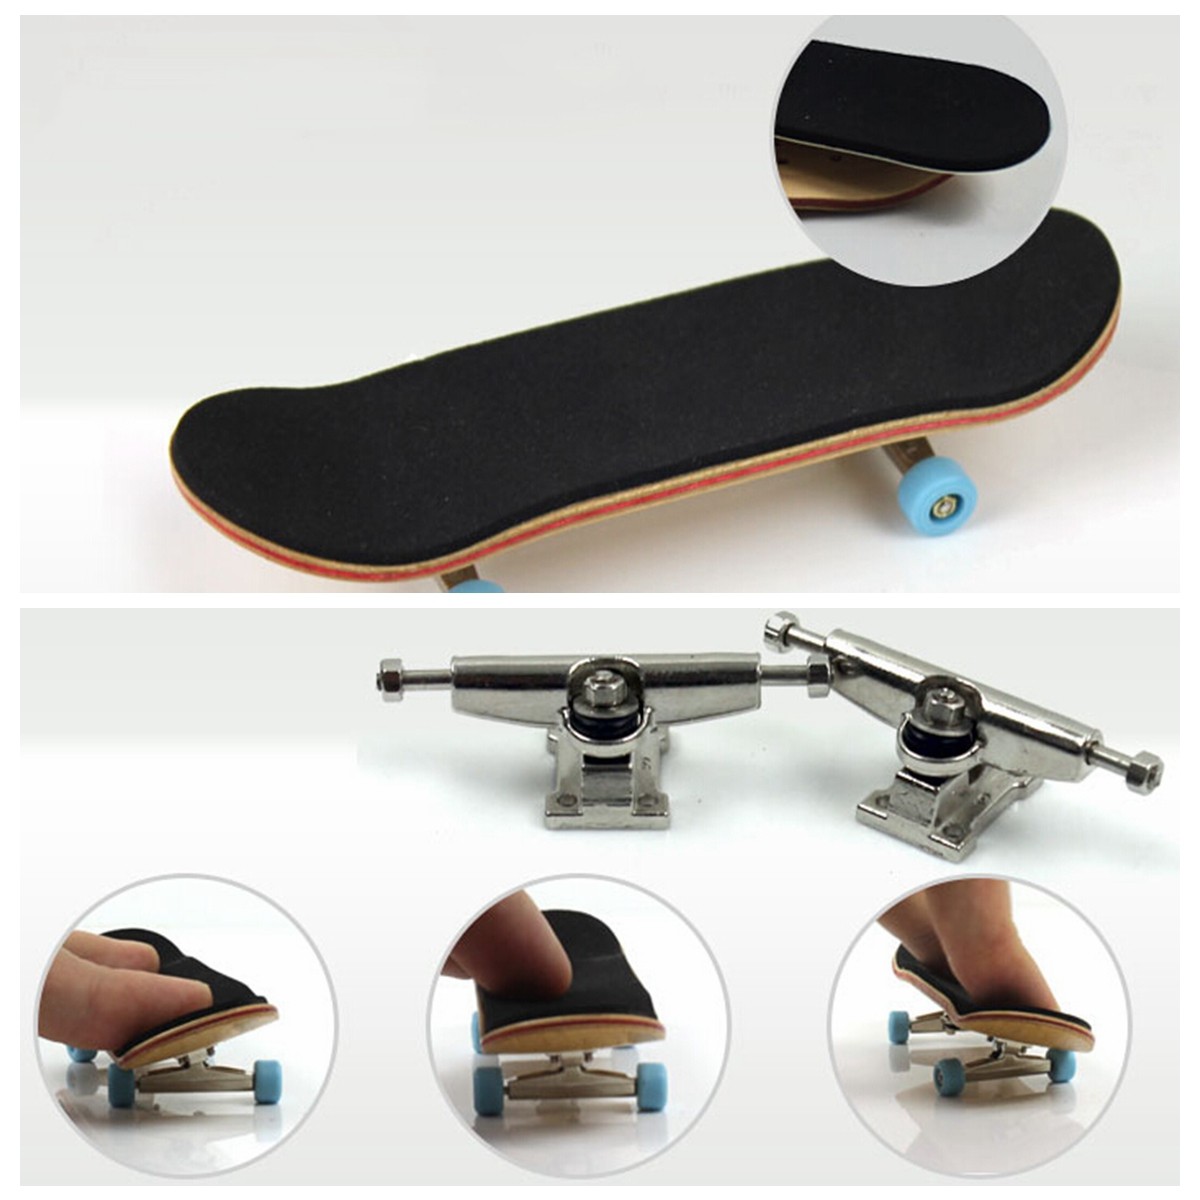 Wooden-Deck-Fingerboard-Skateboard-Maple-Wood-with-Bearings-Kids-Gift-Decorations-1276220